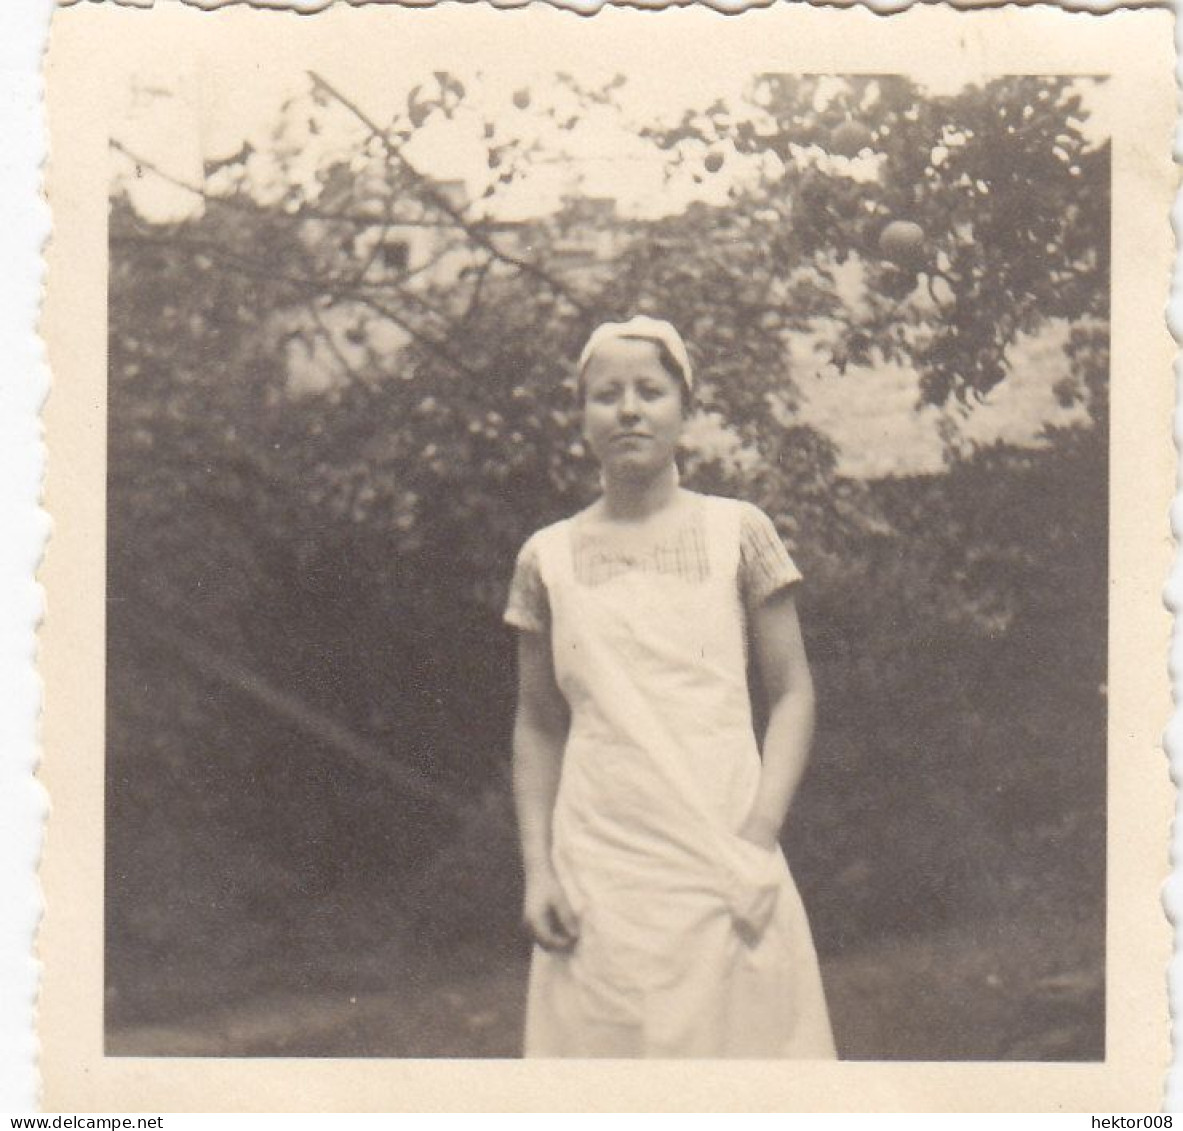 Altes Foto Vintage. Hübsche Junges Mädchen. Um 1935 (  B14  ) - Personnes Anonymes